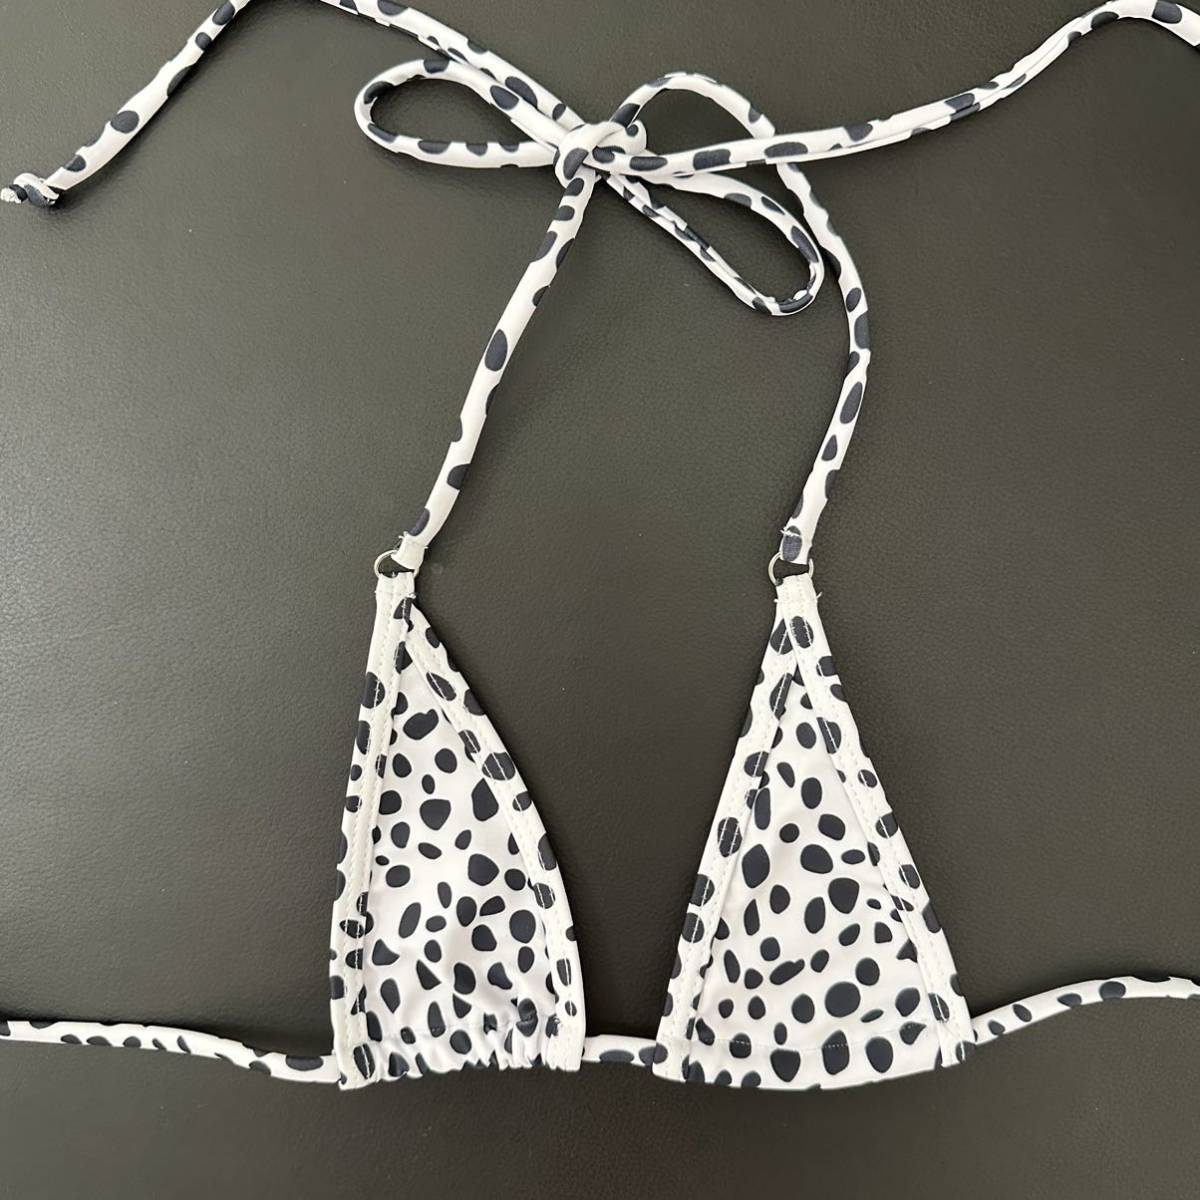  micro bikini halter-neck top and bottom set lady's swimsuit Dalmatian pattern 